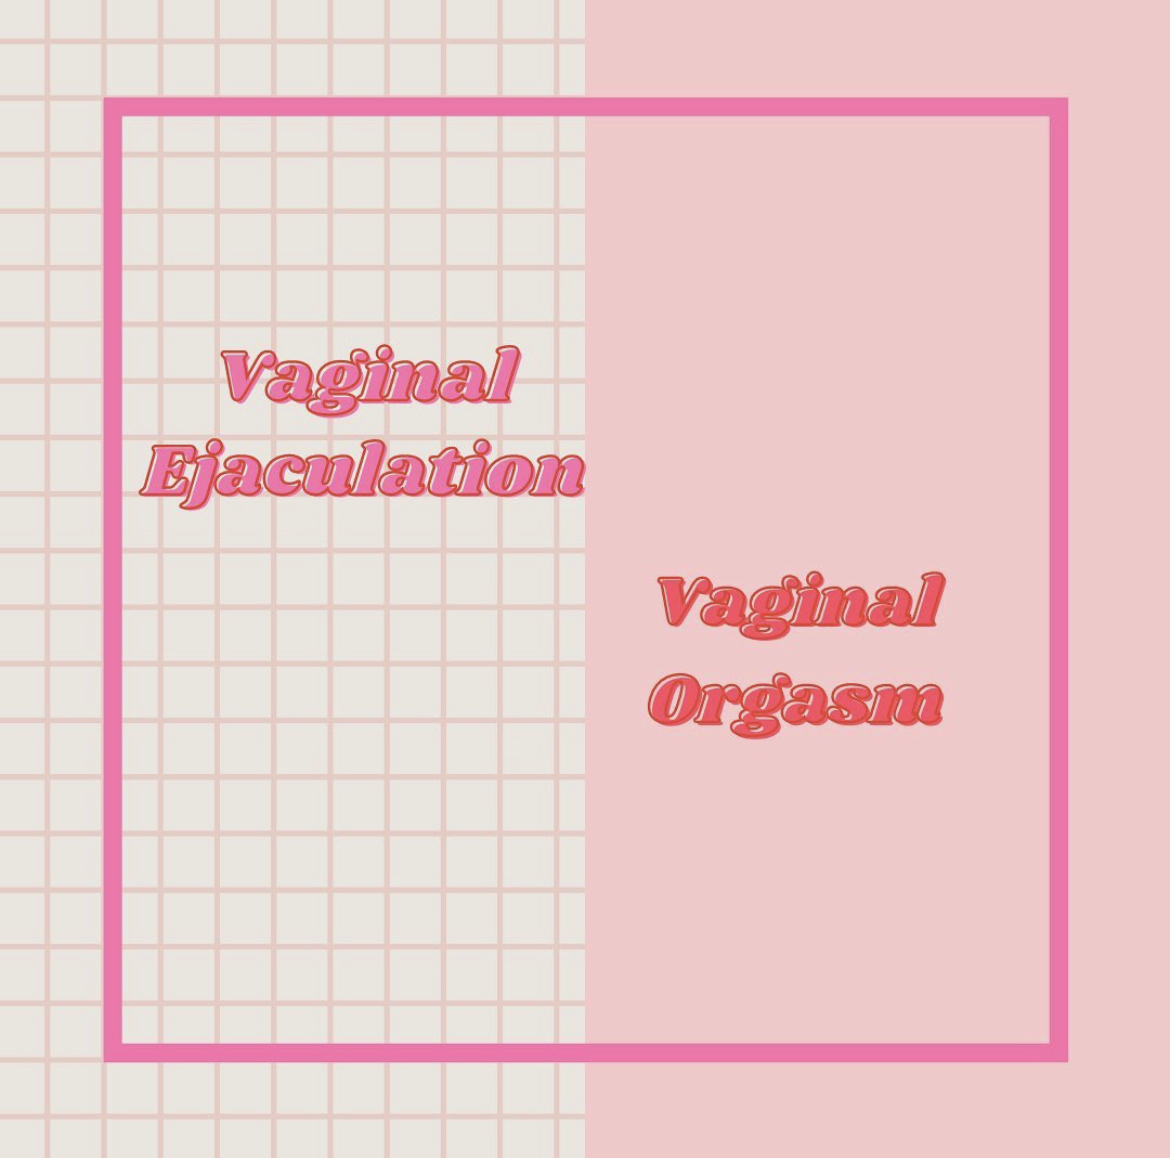 Vaginal Orgasm vs Ejaculation